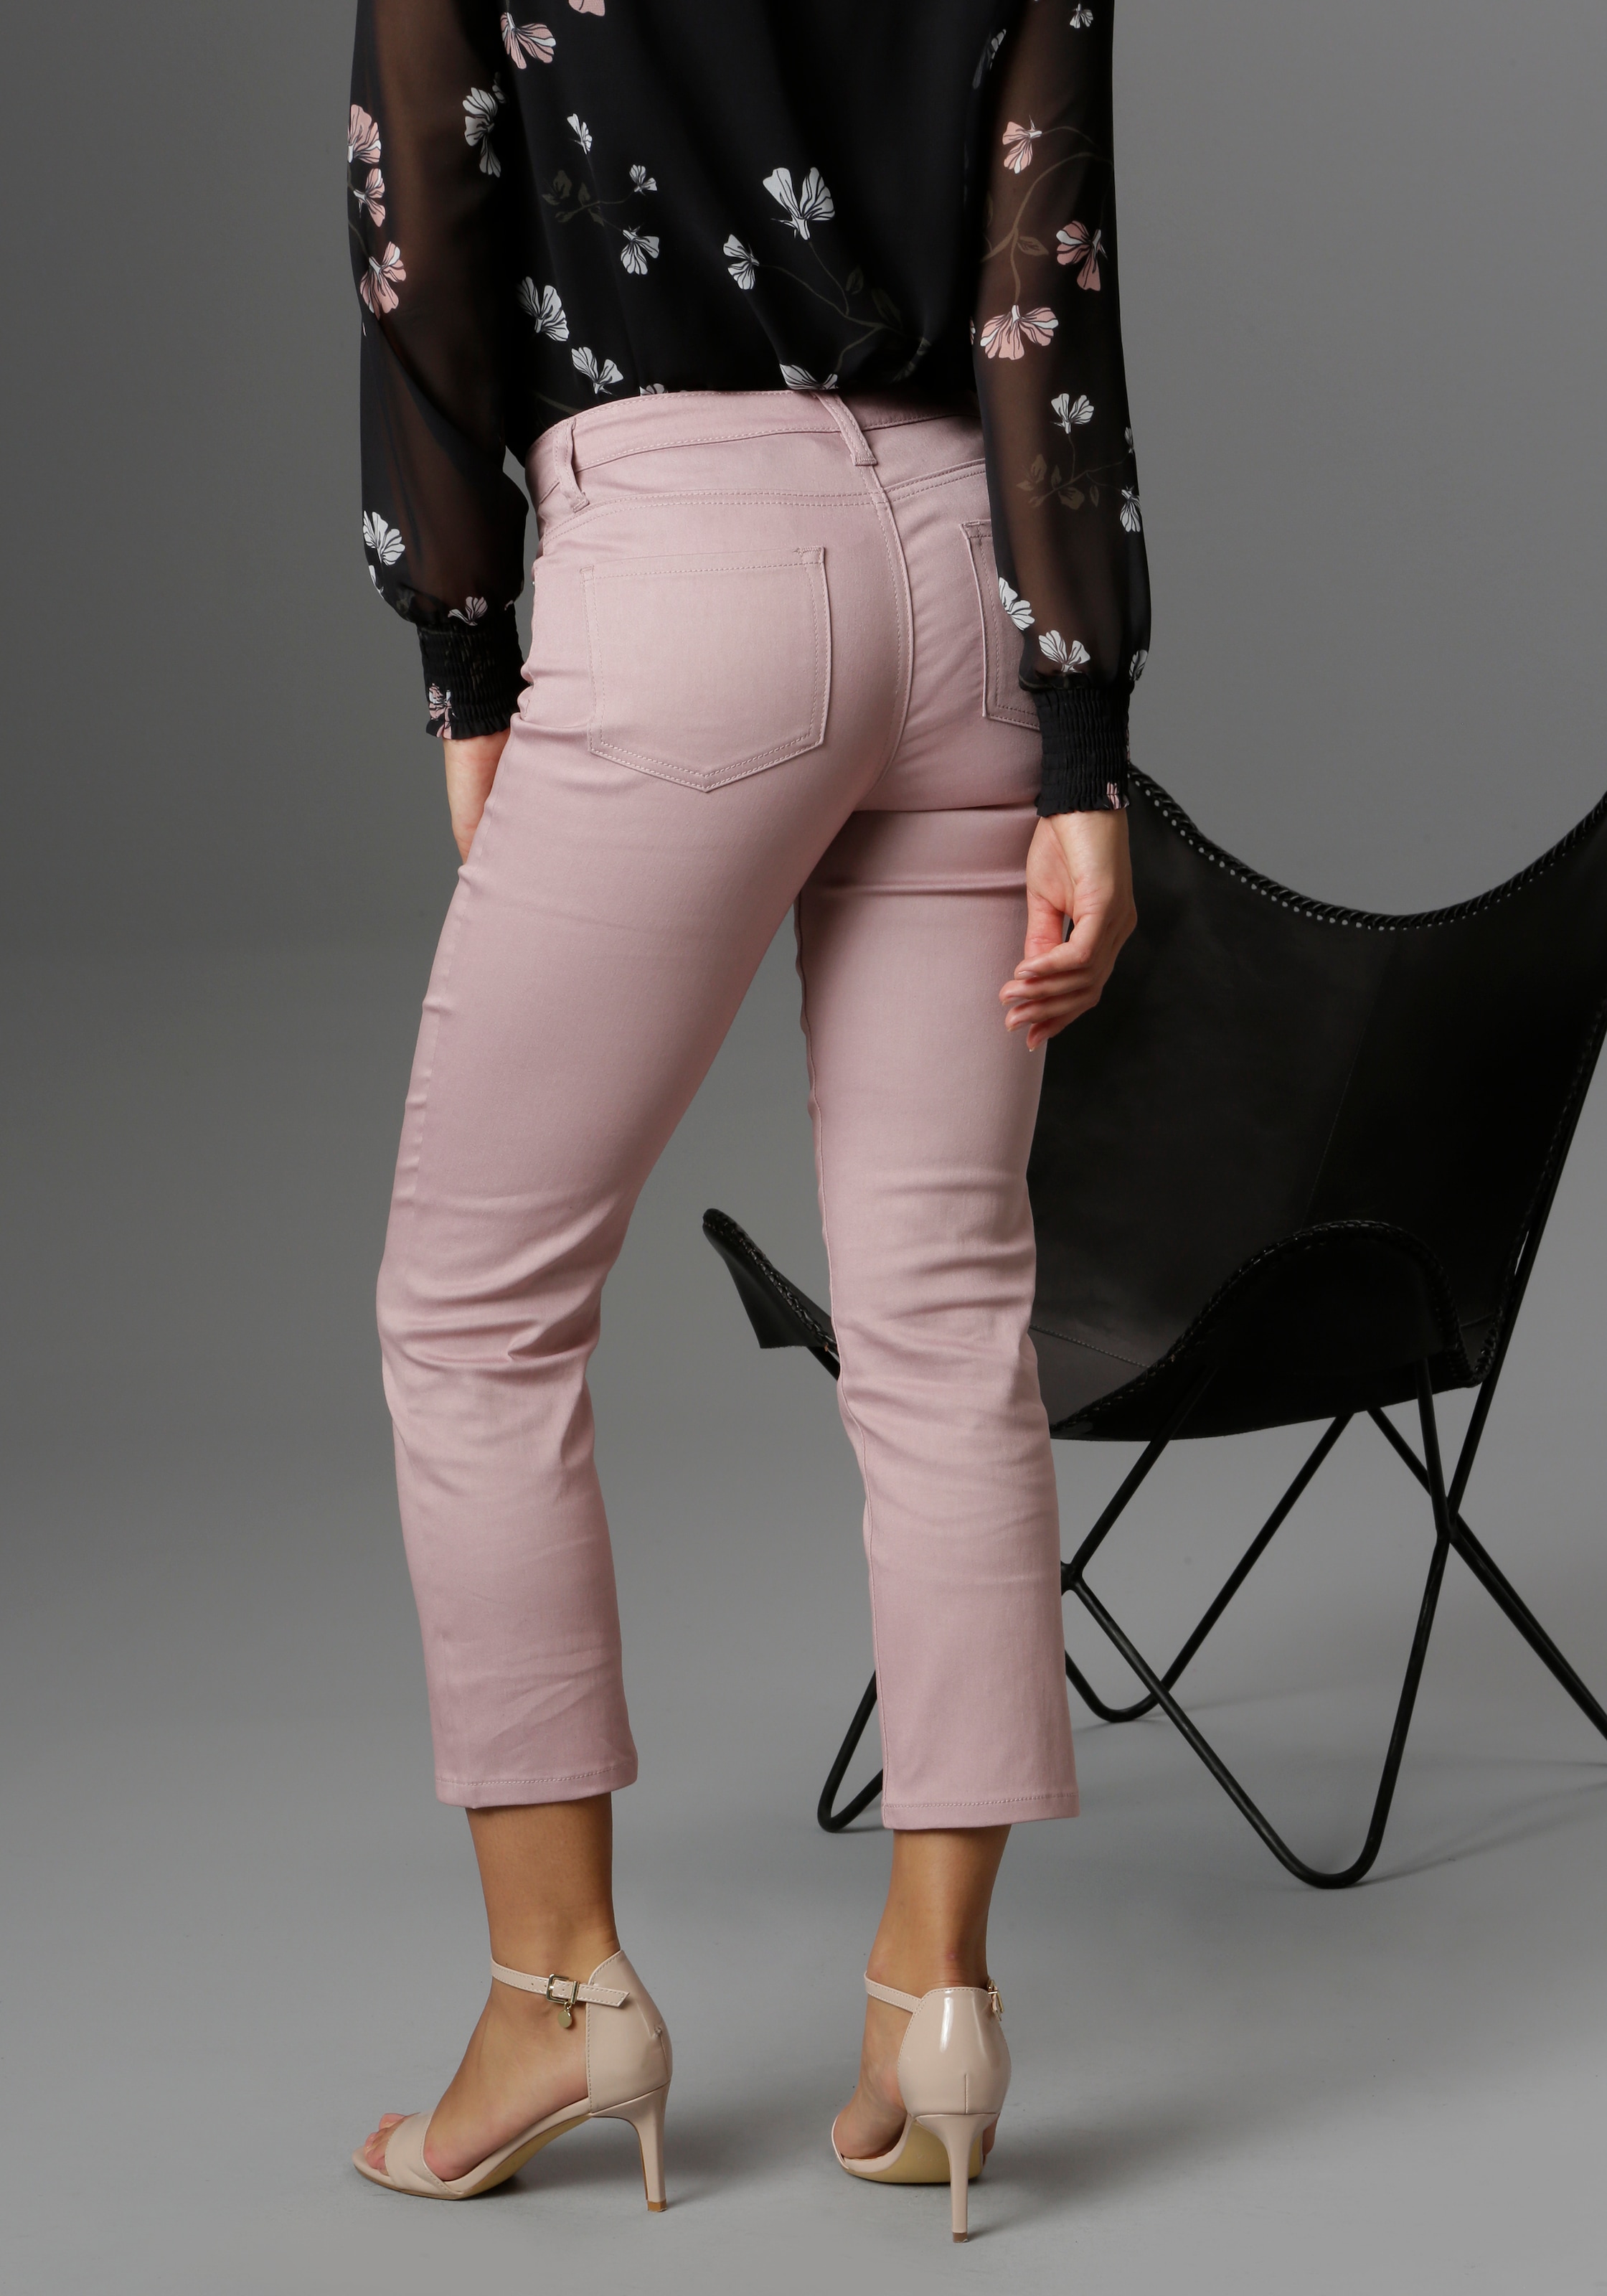 Aniston SELECTED Straight-Jeans, in verkürzter cropped Länge bei ♕